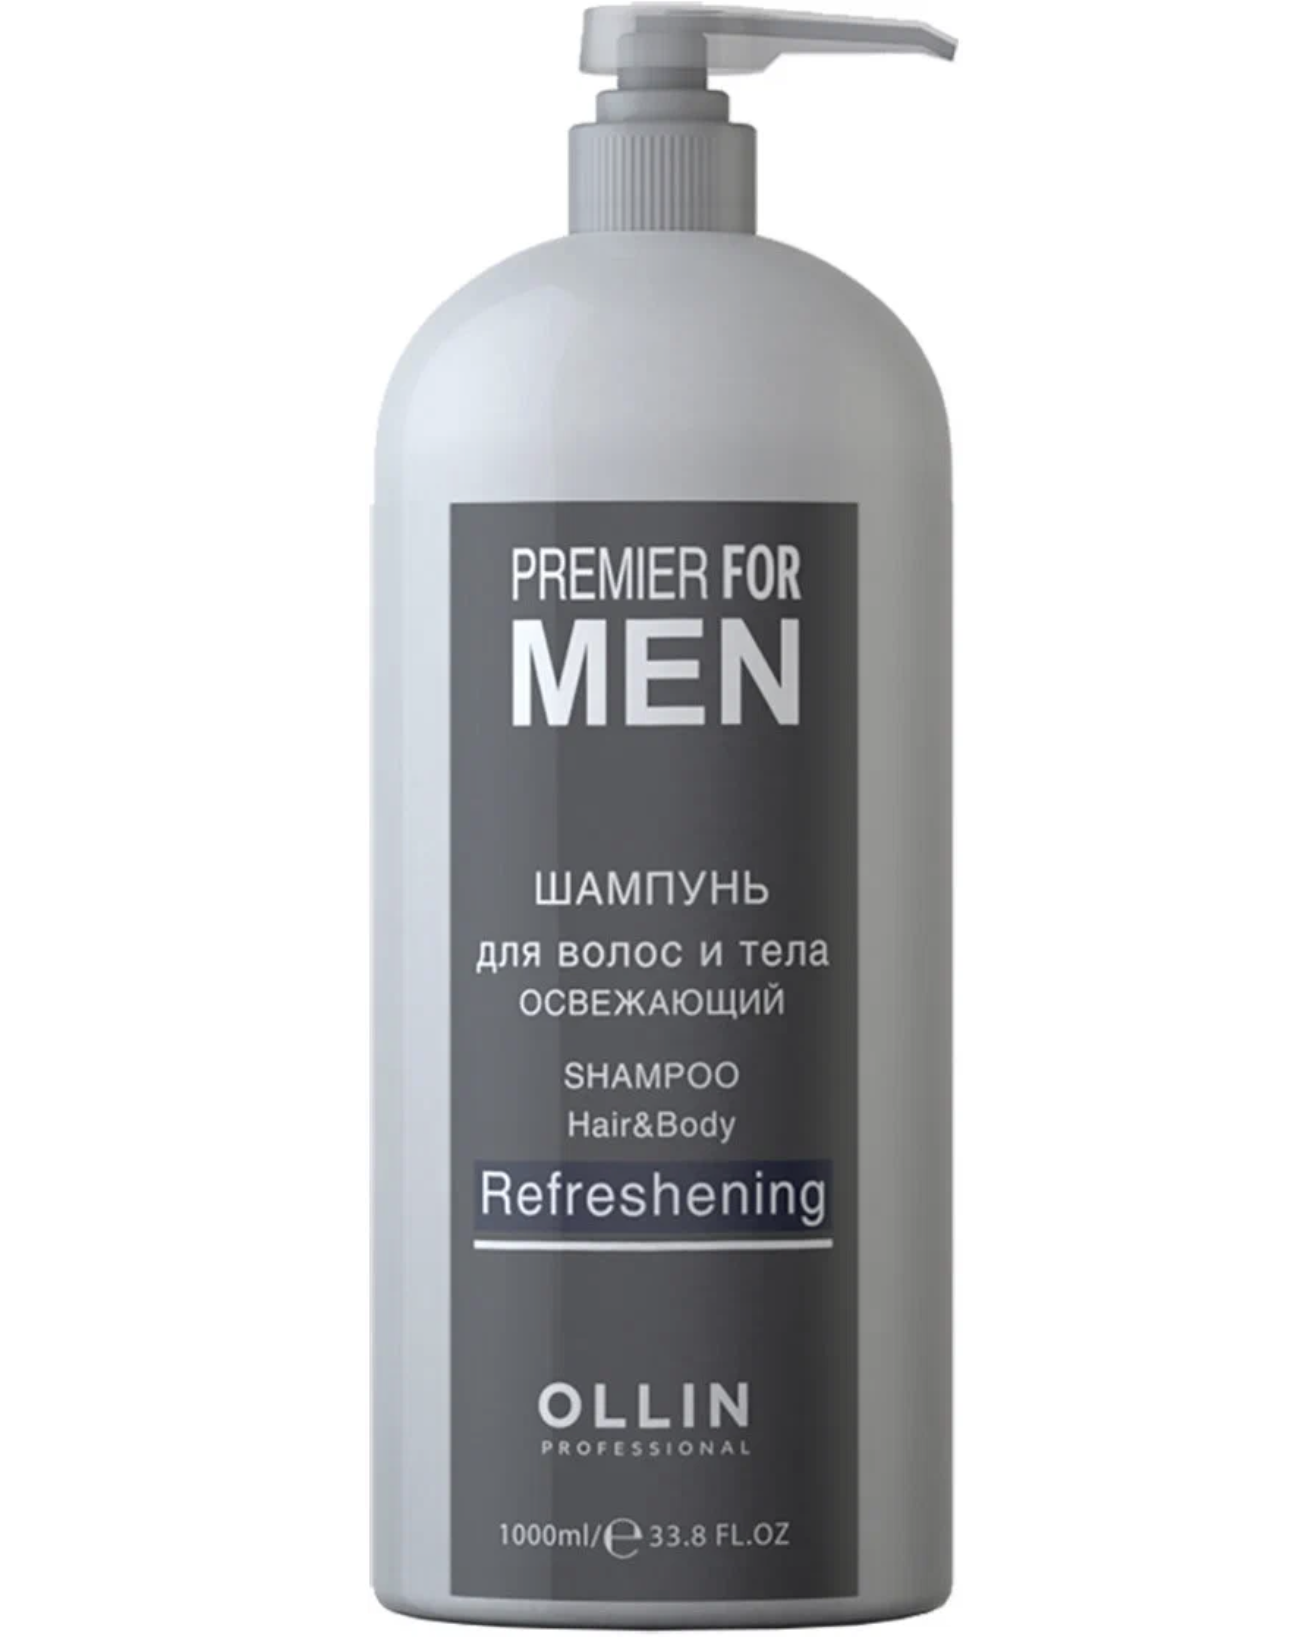   / Ollin Professional -       Premier for Men 1000 